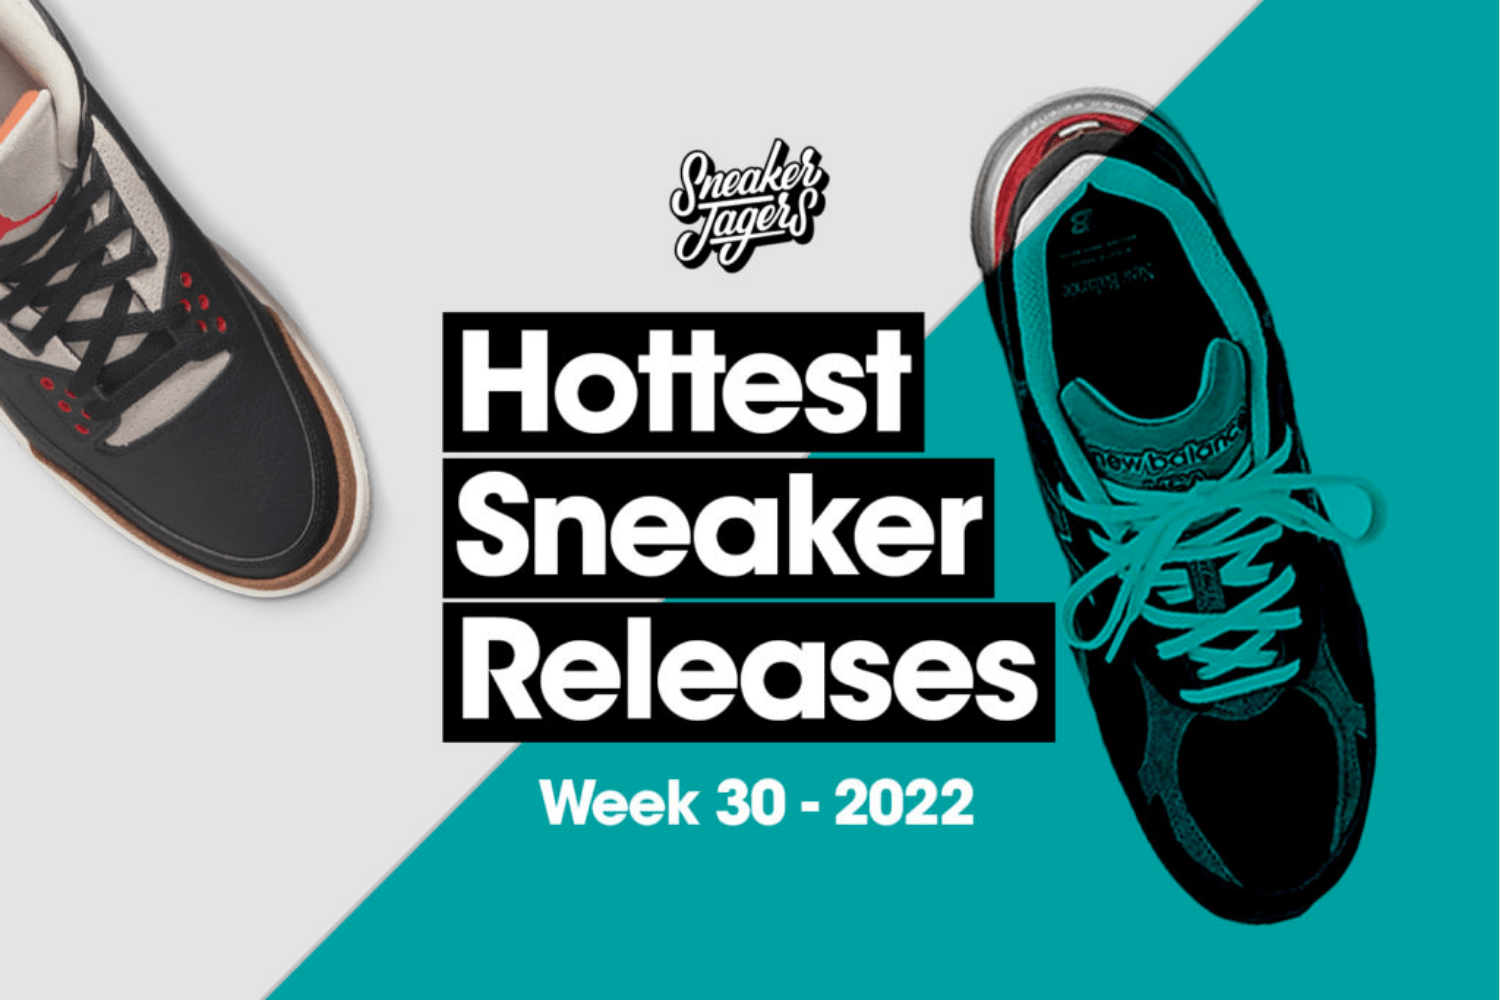 Hottest Sneaker Release Reminder Juli 🔥 Woche 30